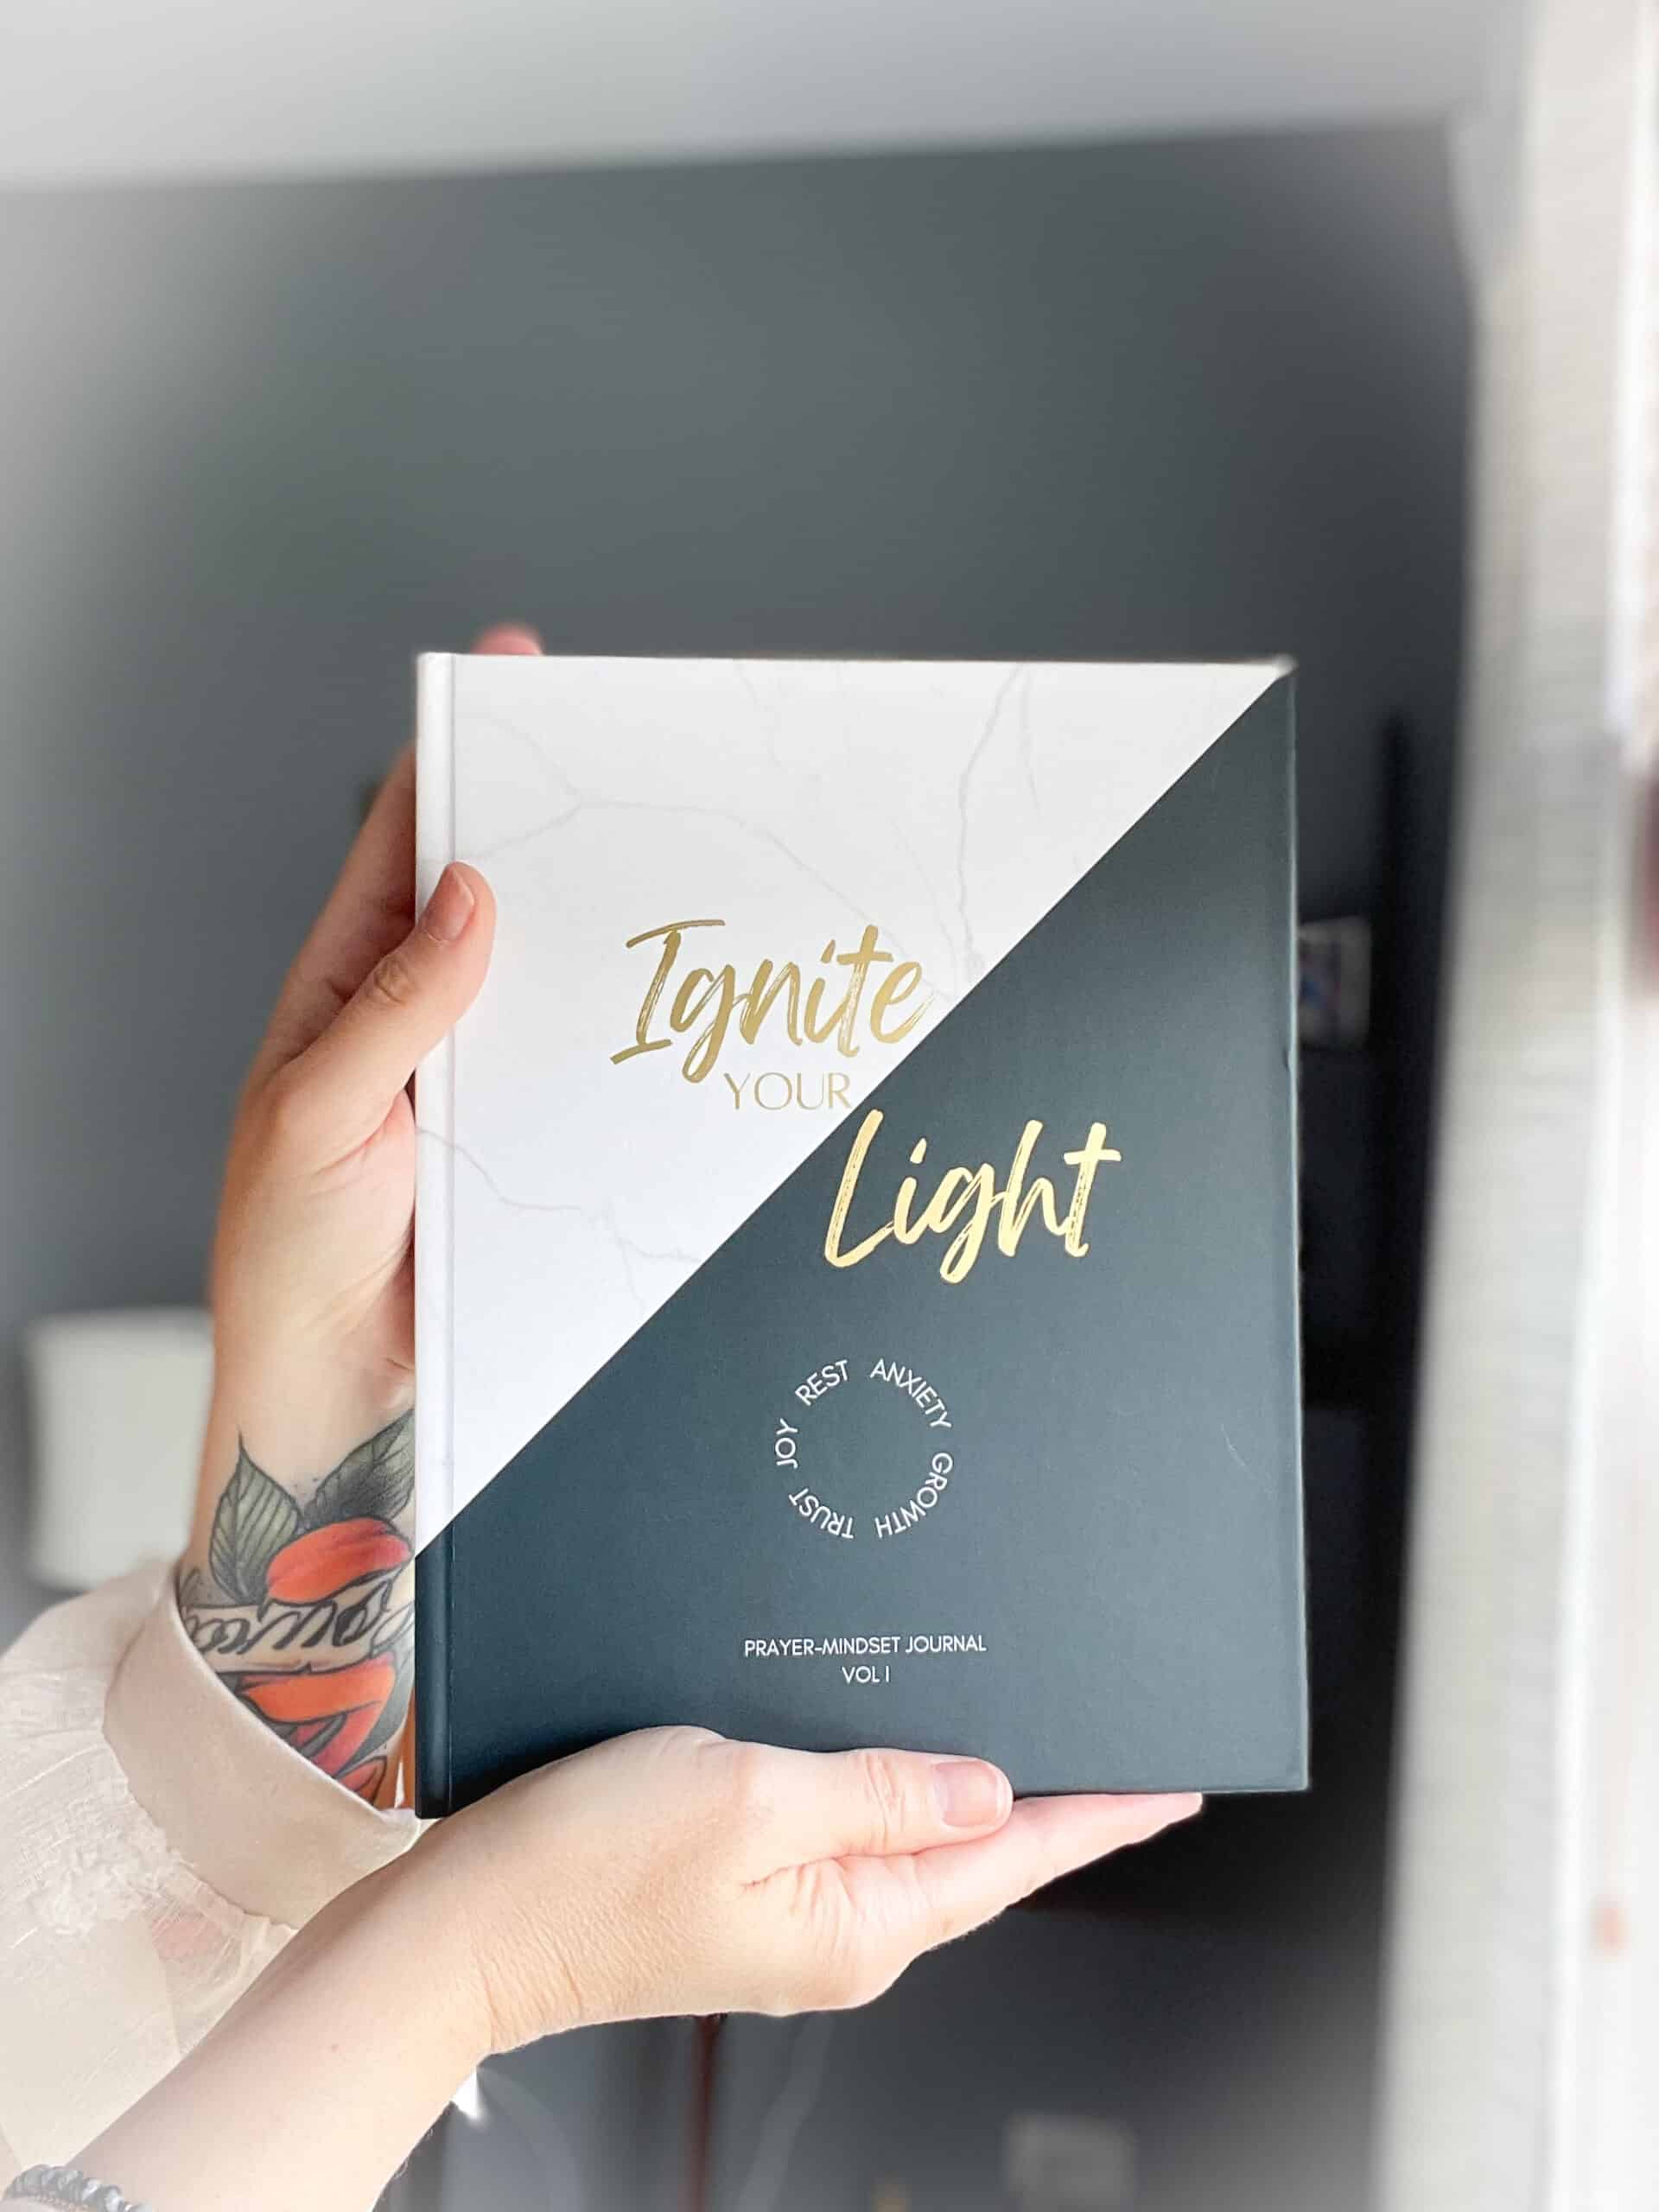 Allison Scholes holding the new prayer-mindset journal: Ignite Your Light